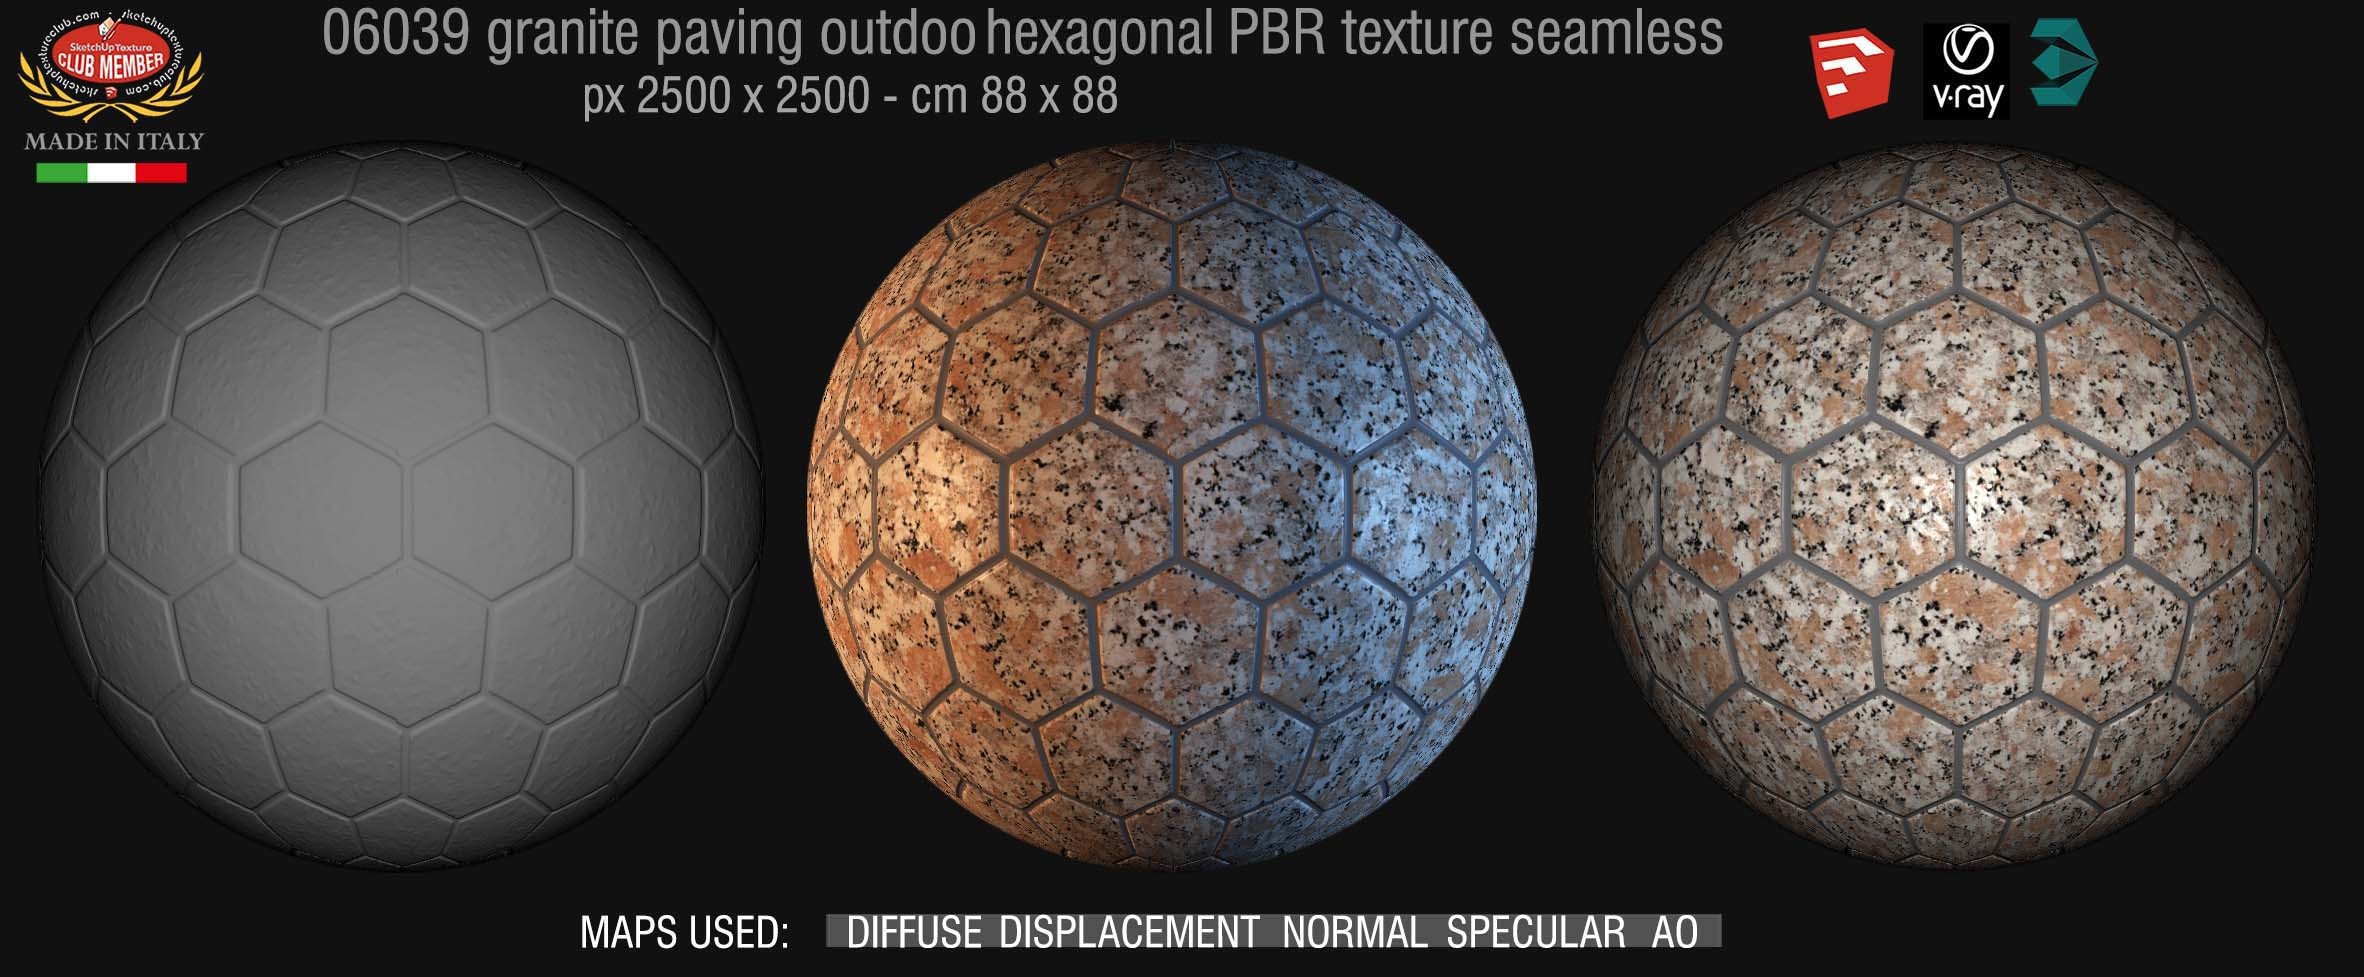 06039 granite paving outdoor hexagonal PBR texture seamless demo